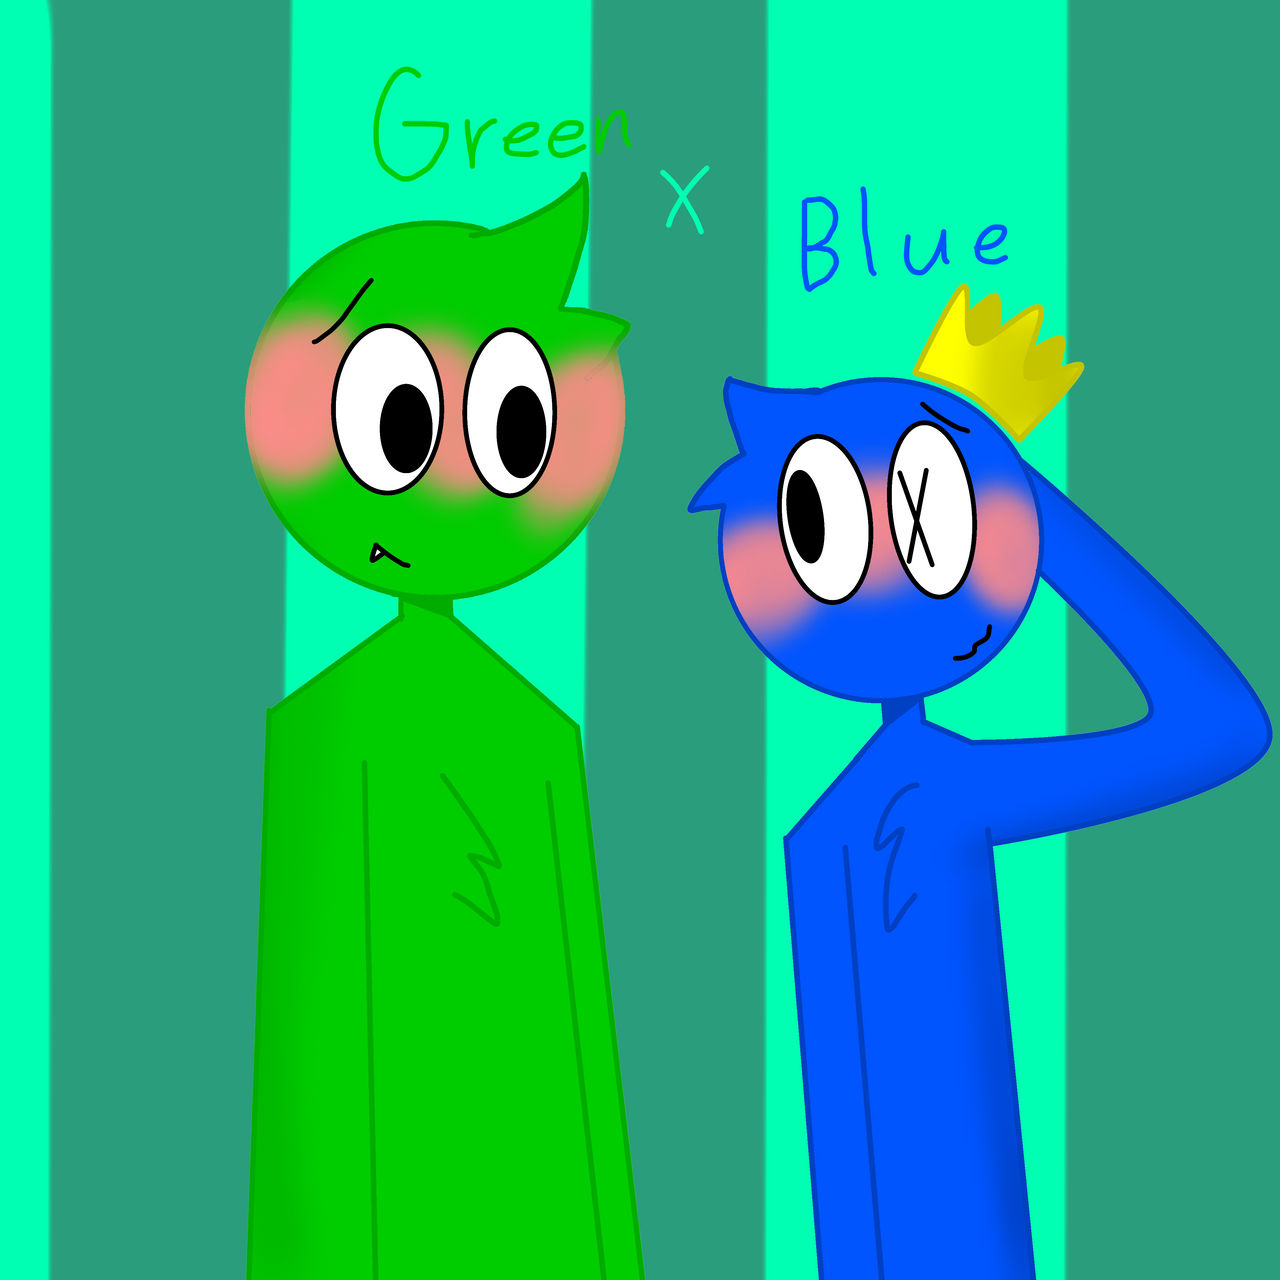 Blue x green rainbow friends 